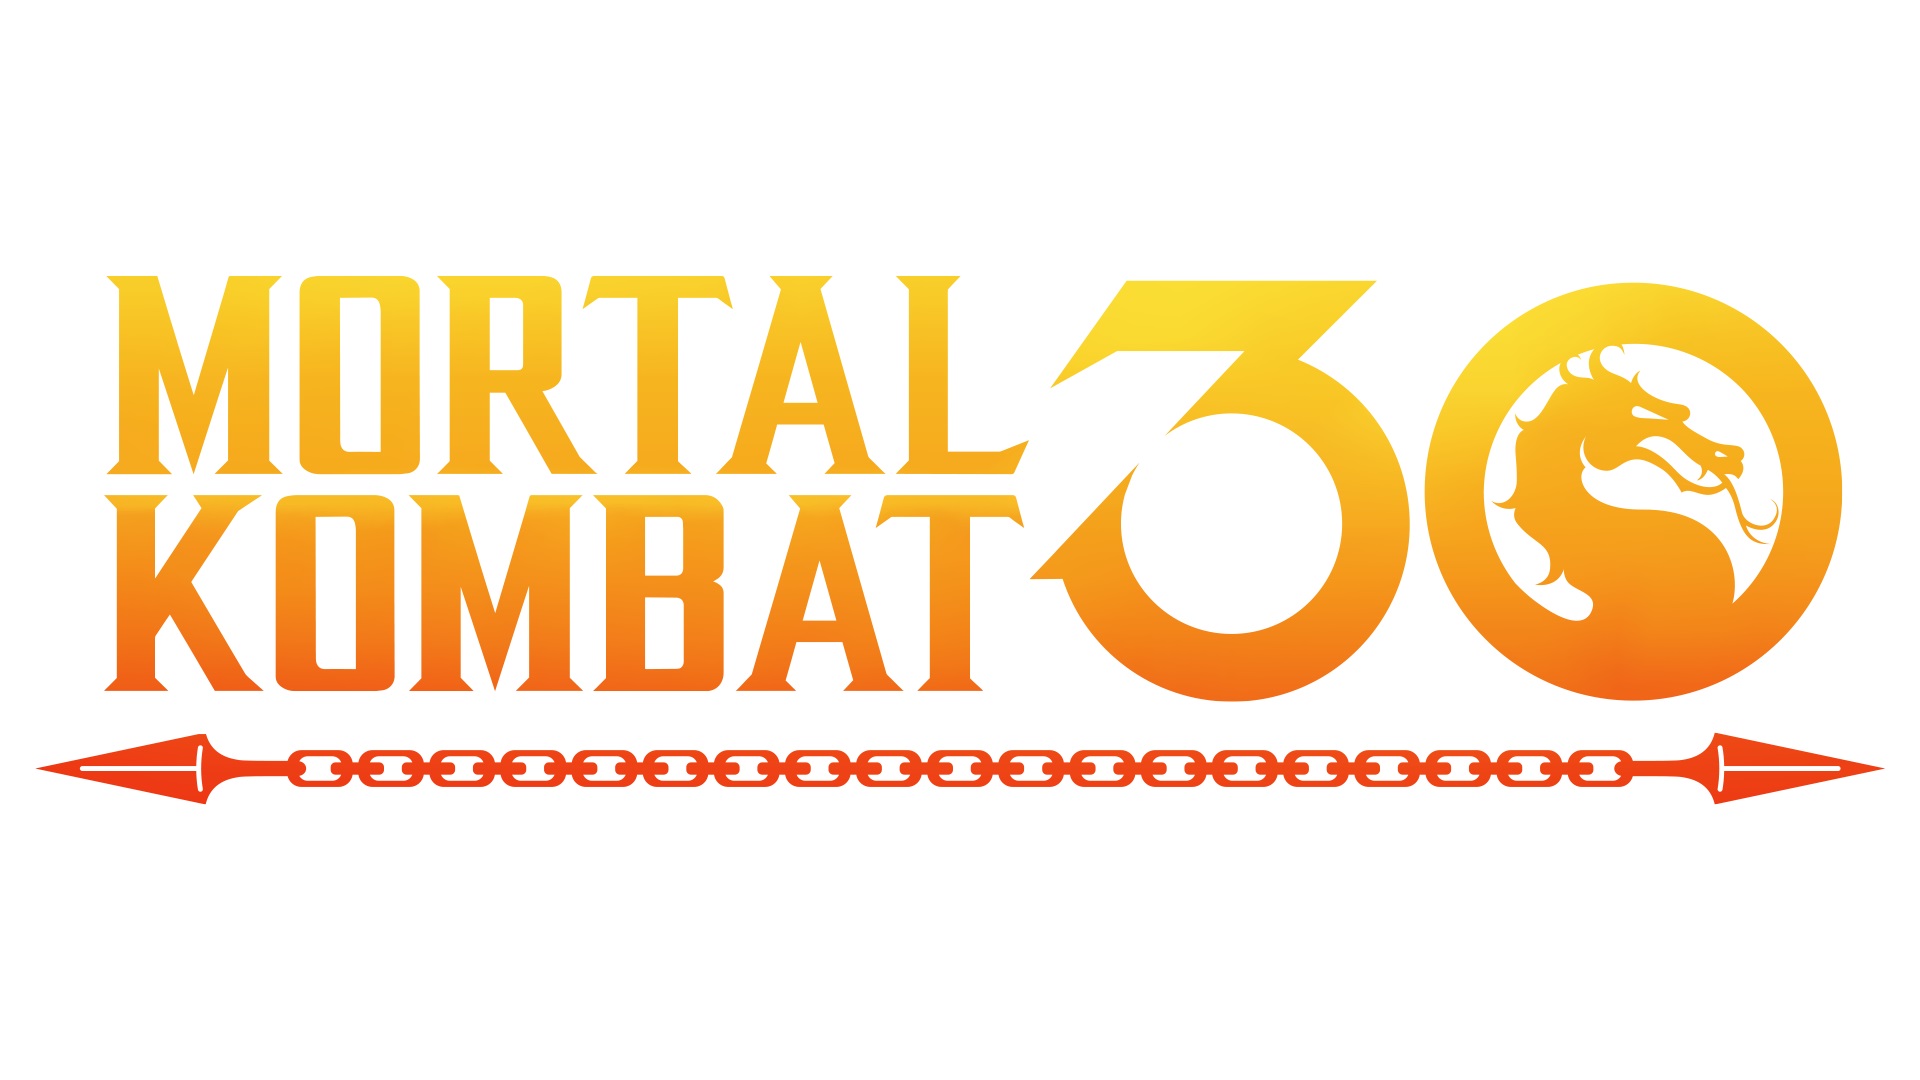 Possible Cross-Platform Functionality for Mortal Kombat 11